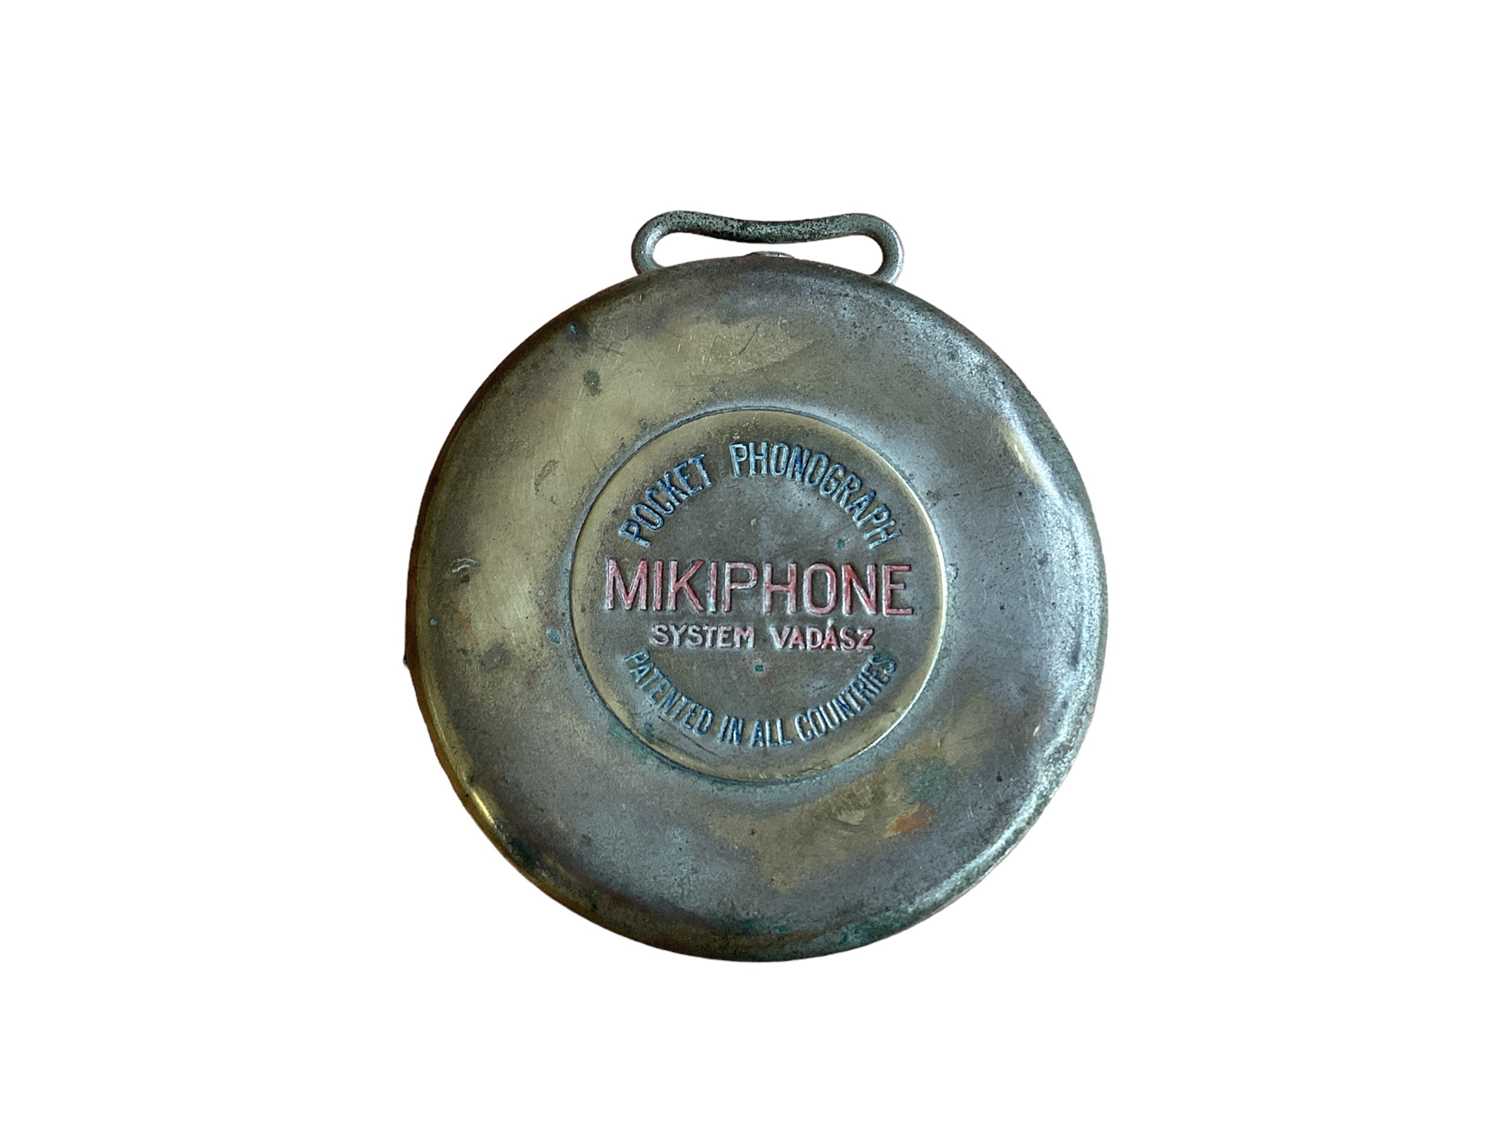 Lot 2207 - Mikiphone pocket phonograph